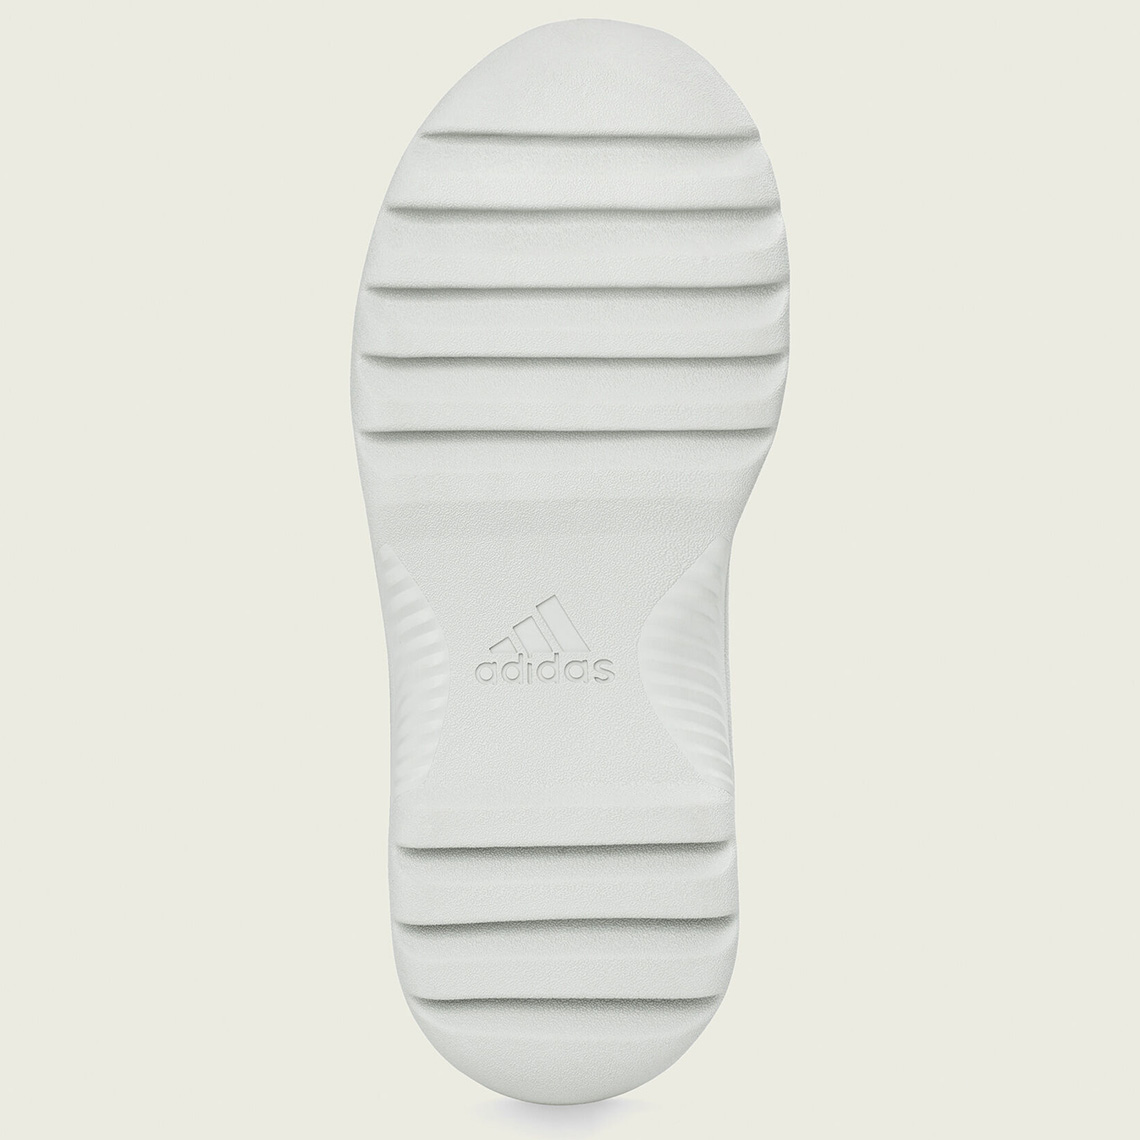 Adidas Yeezy Desert Boot Fv5677 3 1